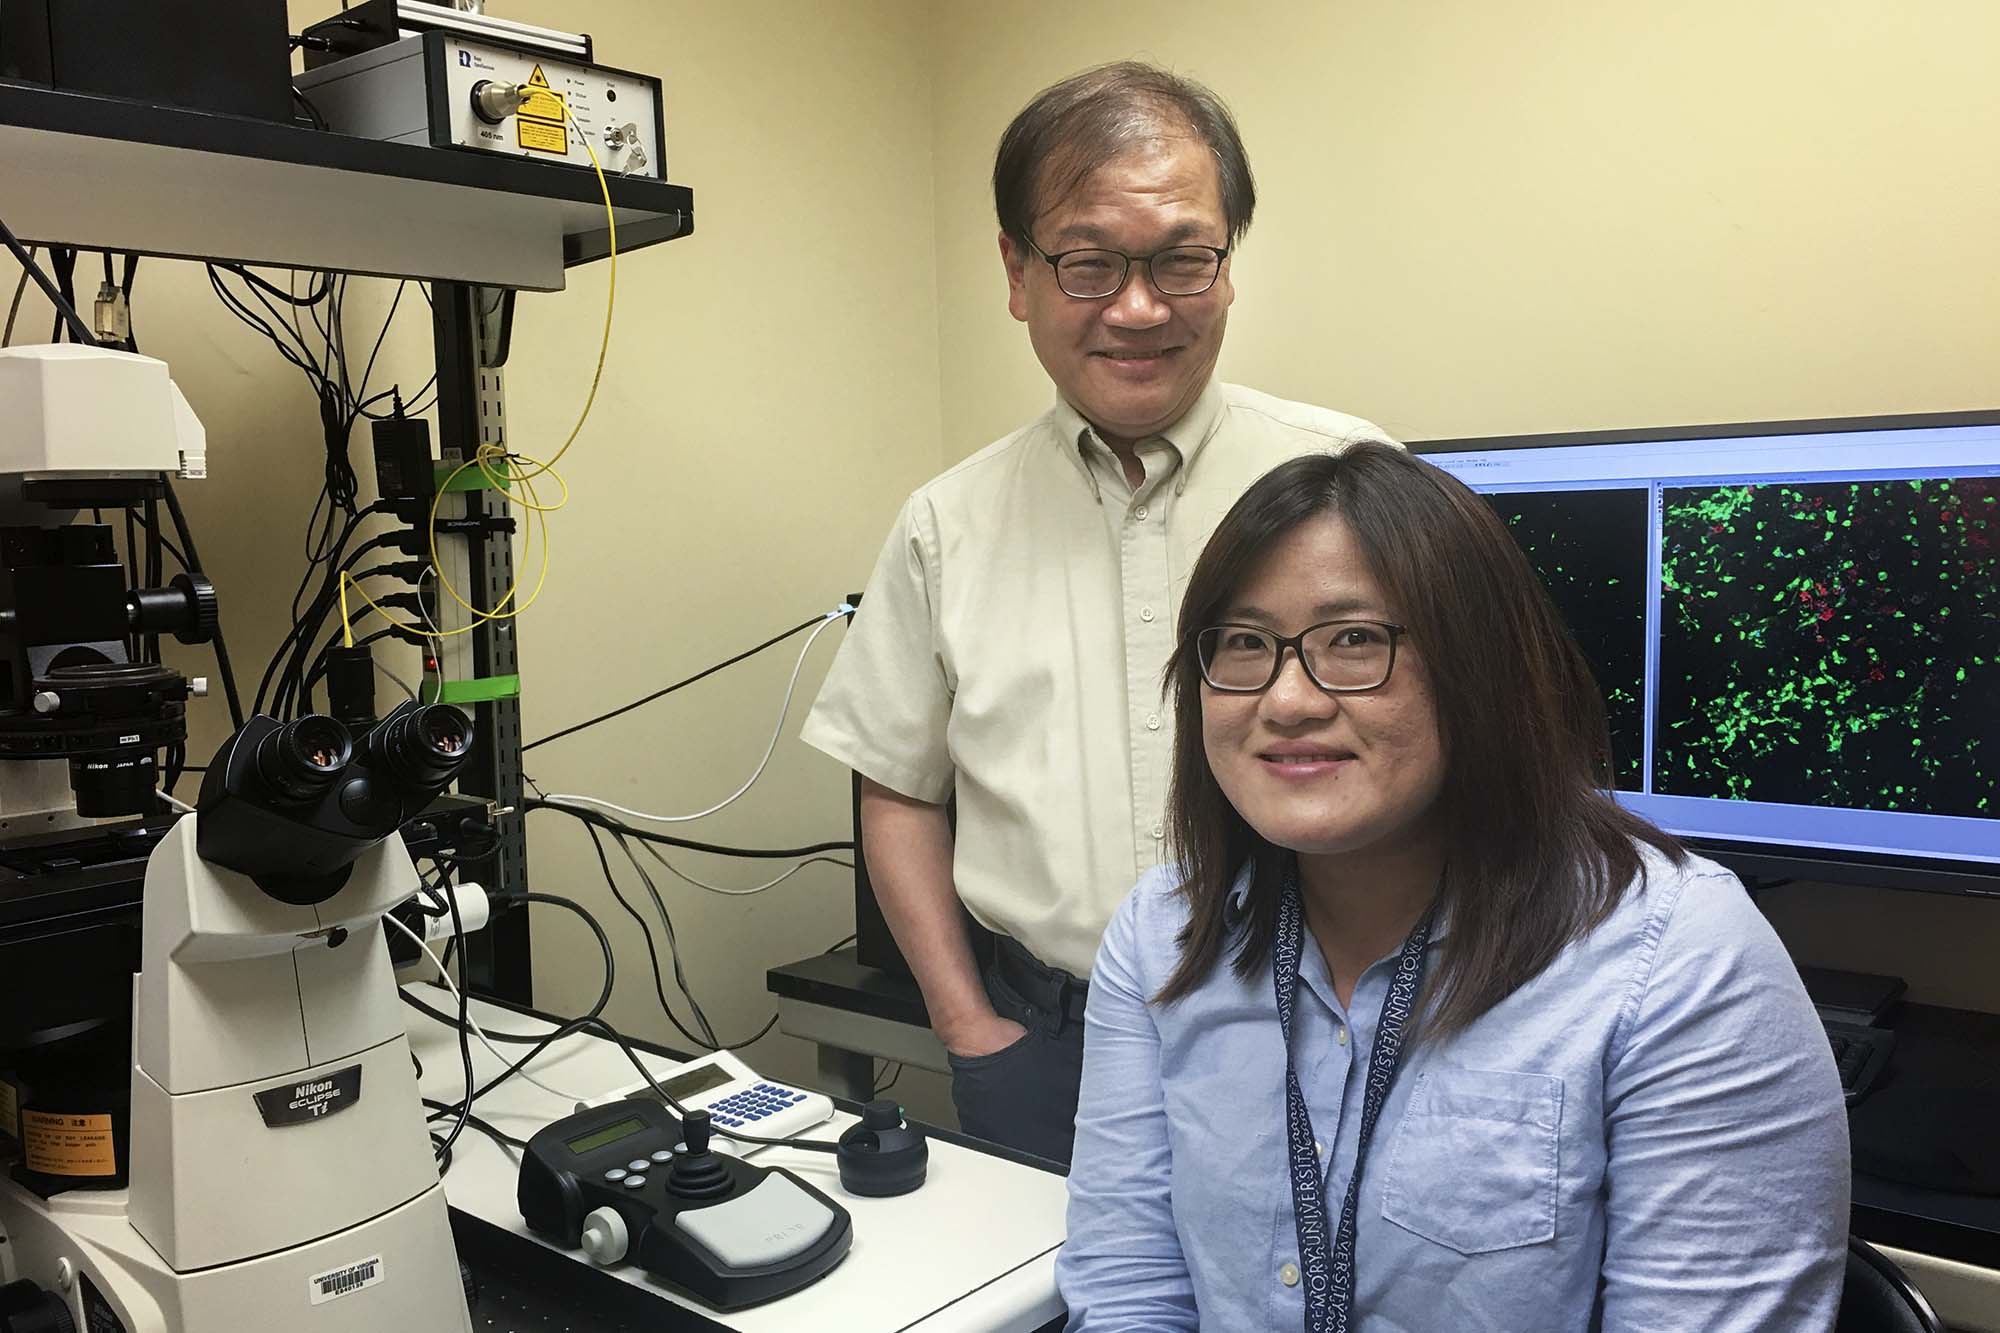 Dr. Chia-Yi “Alex” Kuan, left, and Hong-Ru Chen pose for a photo